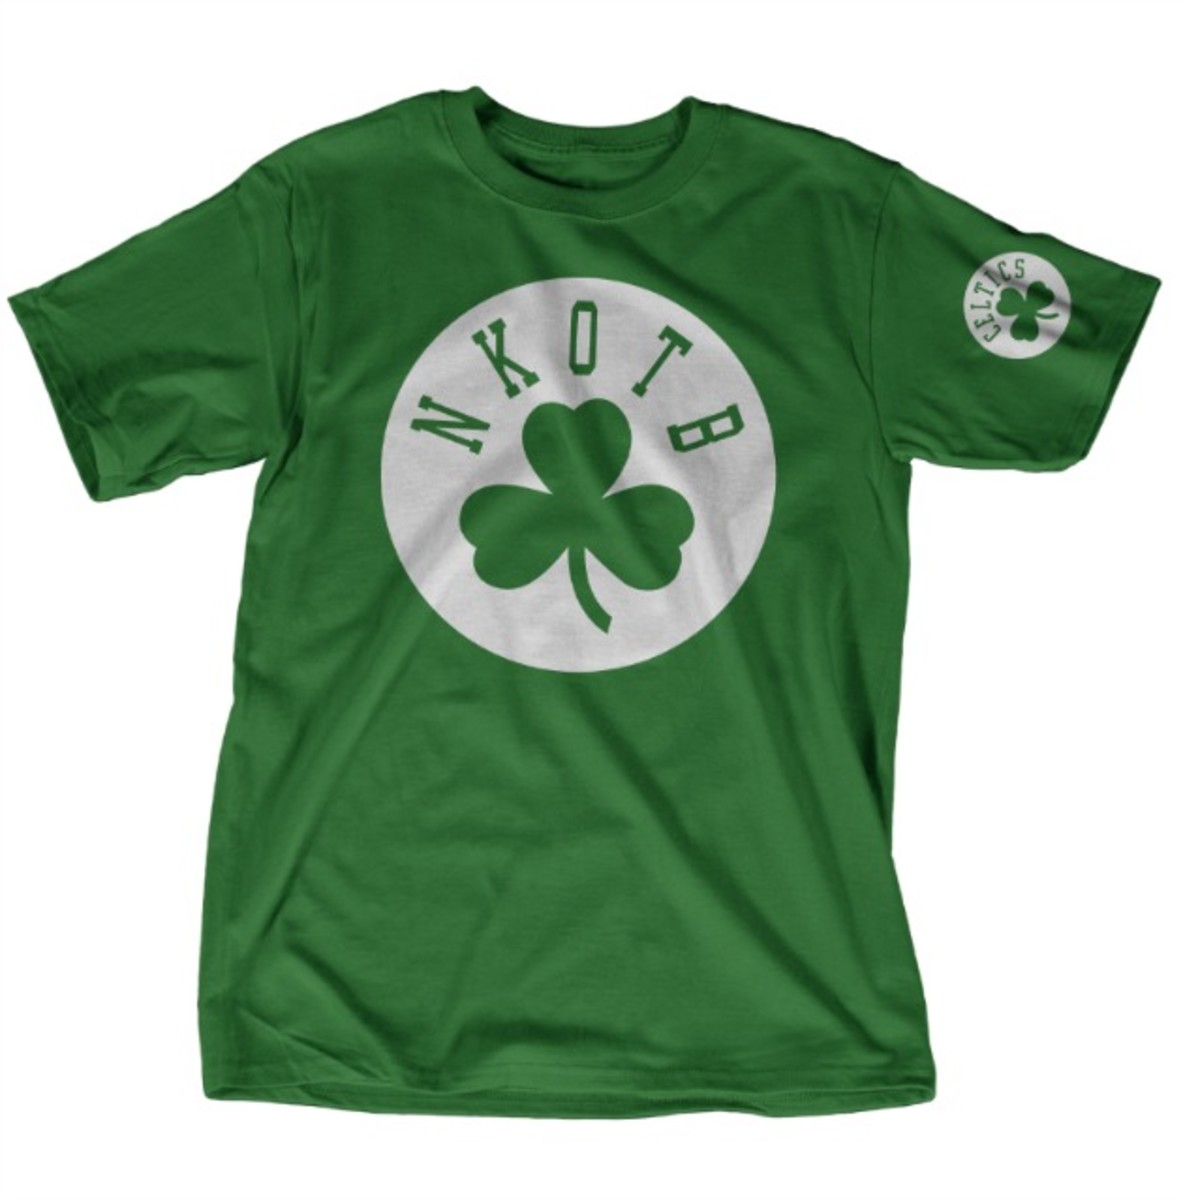 Boston-Celtics-New-Kids-on-The-Block.jpg